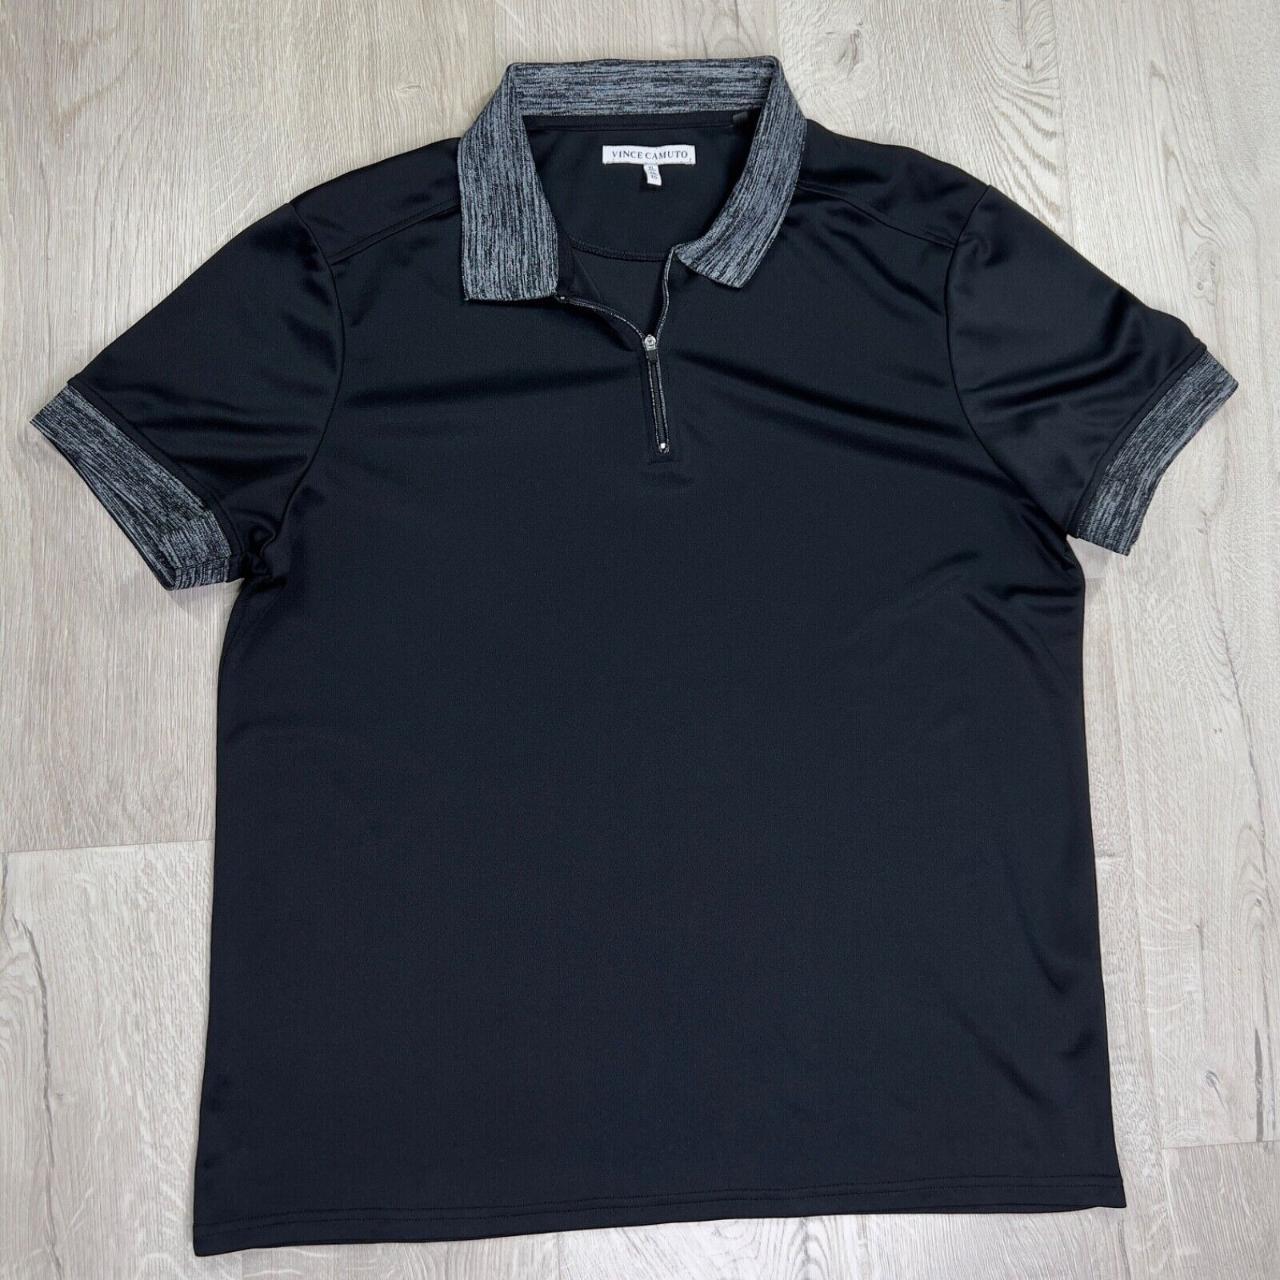 Vince Camuto Men's Black Polo-shirts | Depop